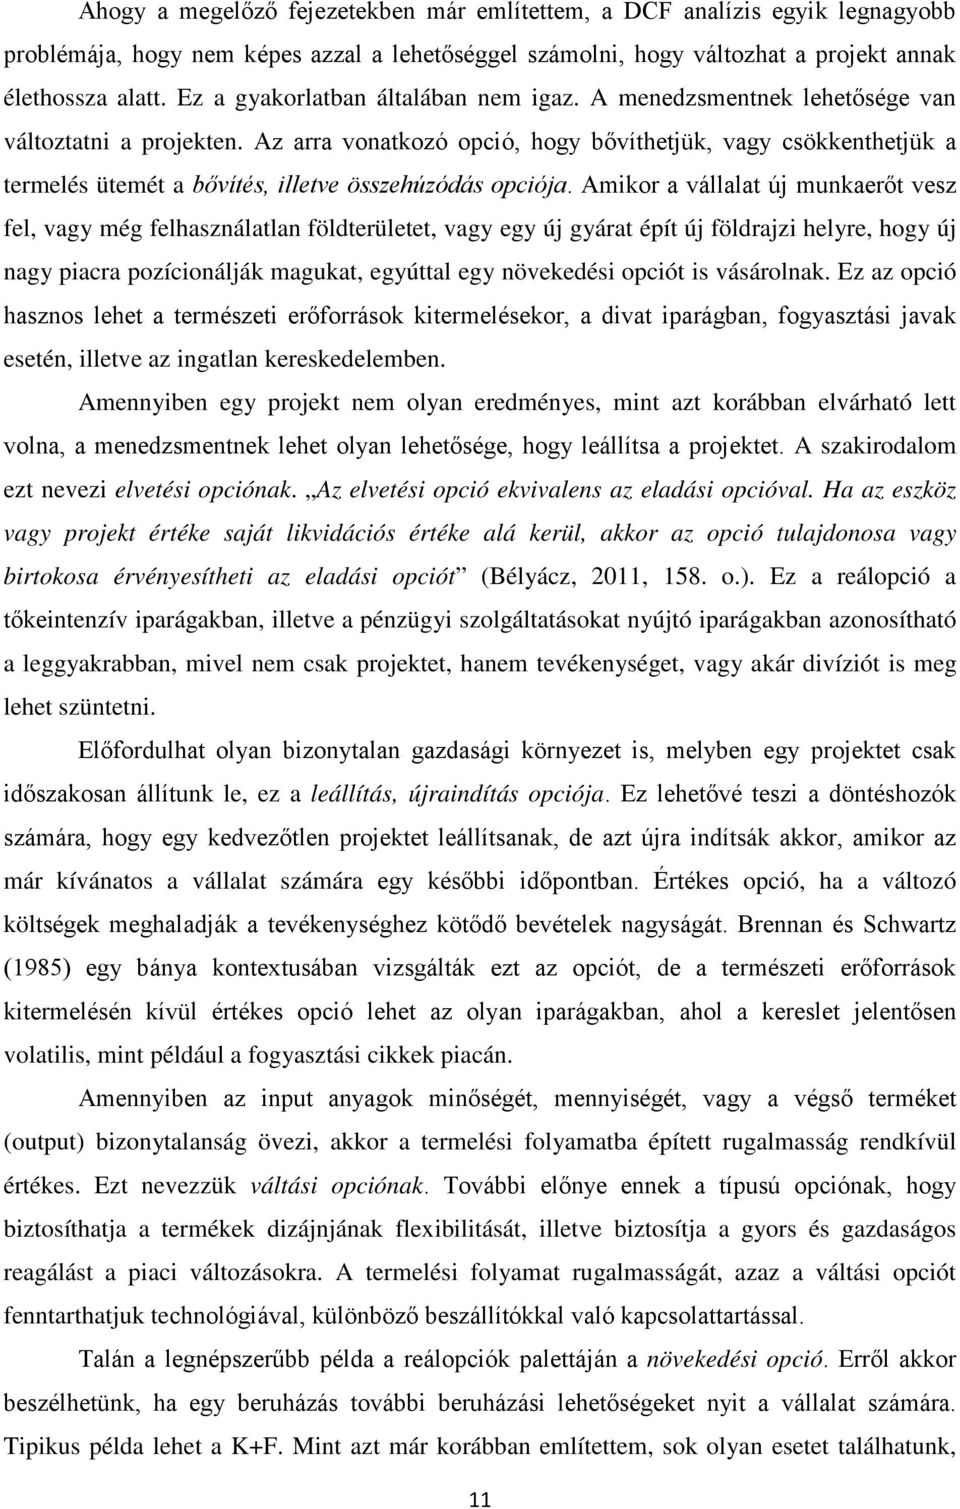 PDF letöltése: csapivivien__ora-orak.hu